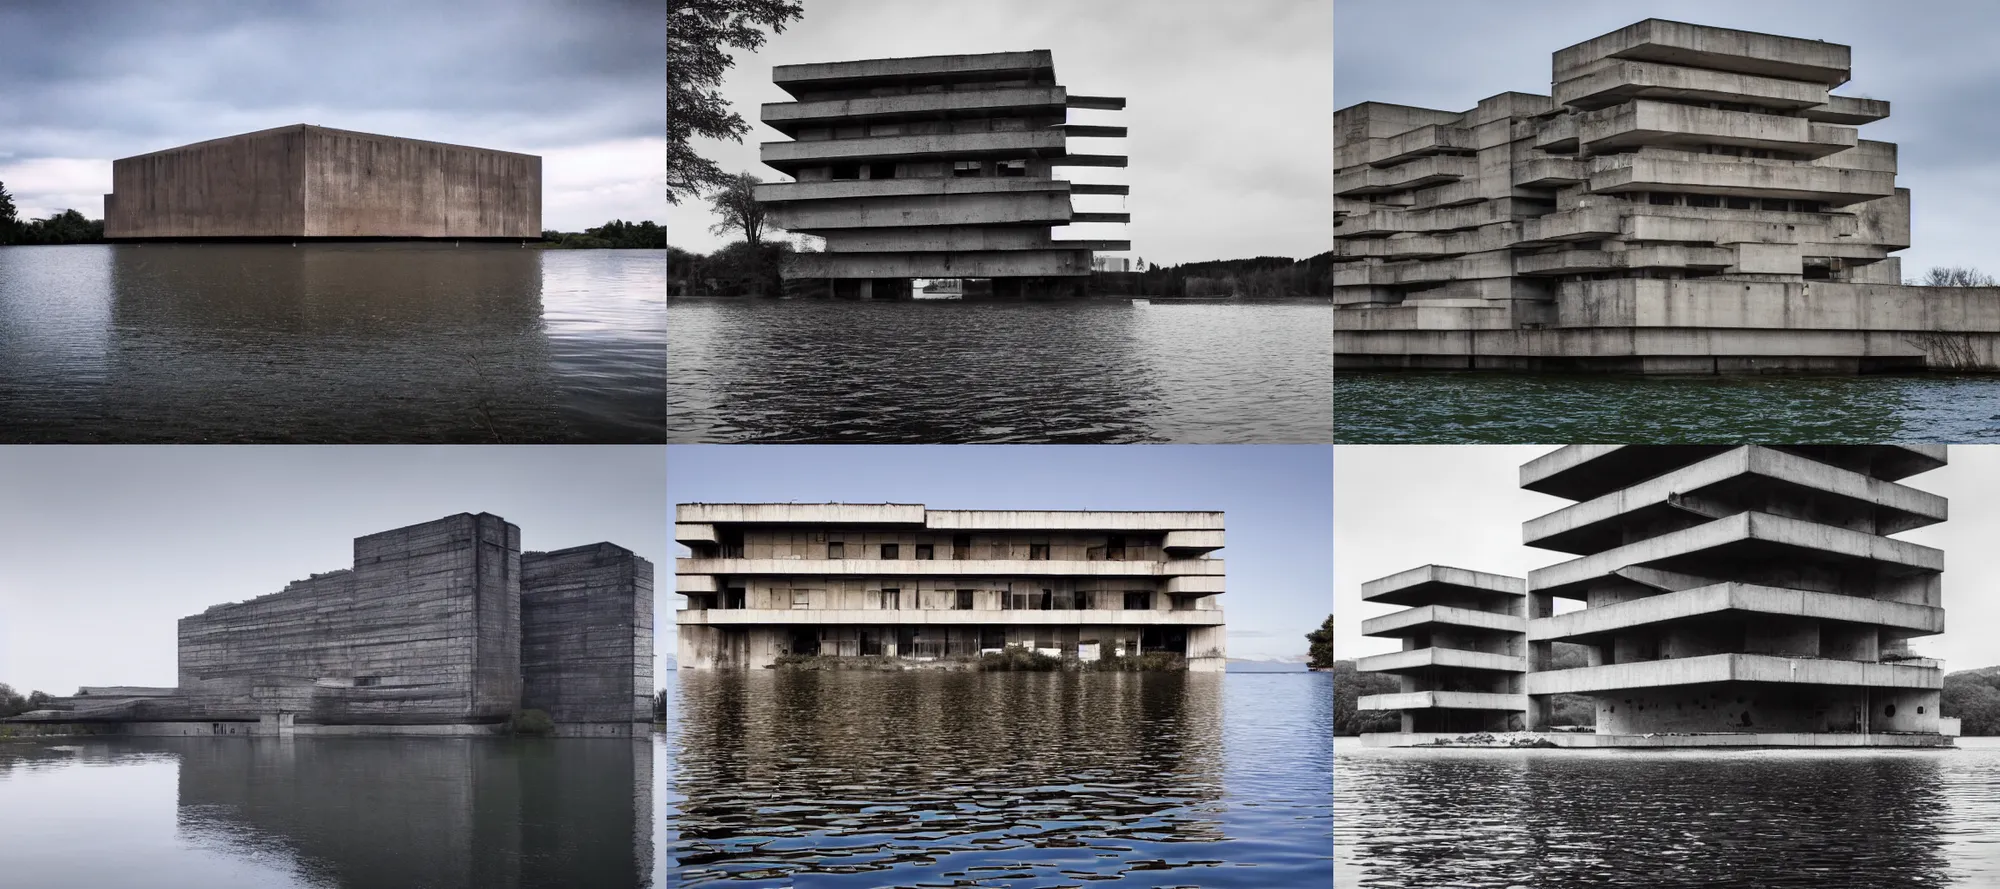 Prompt: Brutalist building on a lake